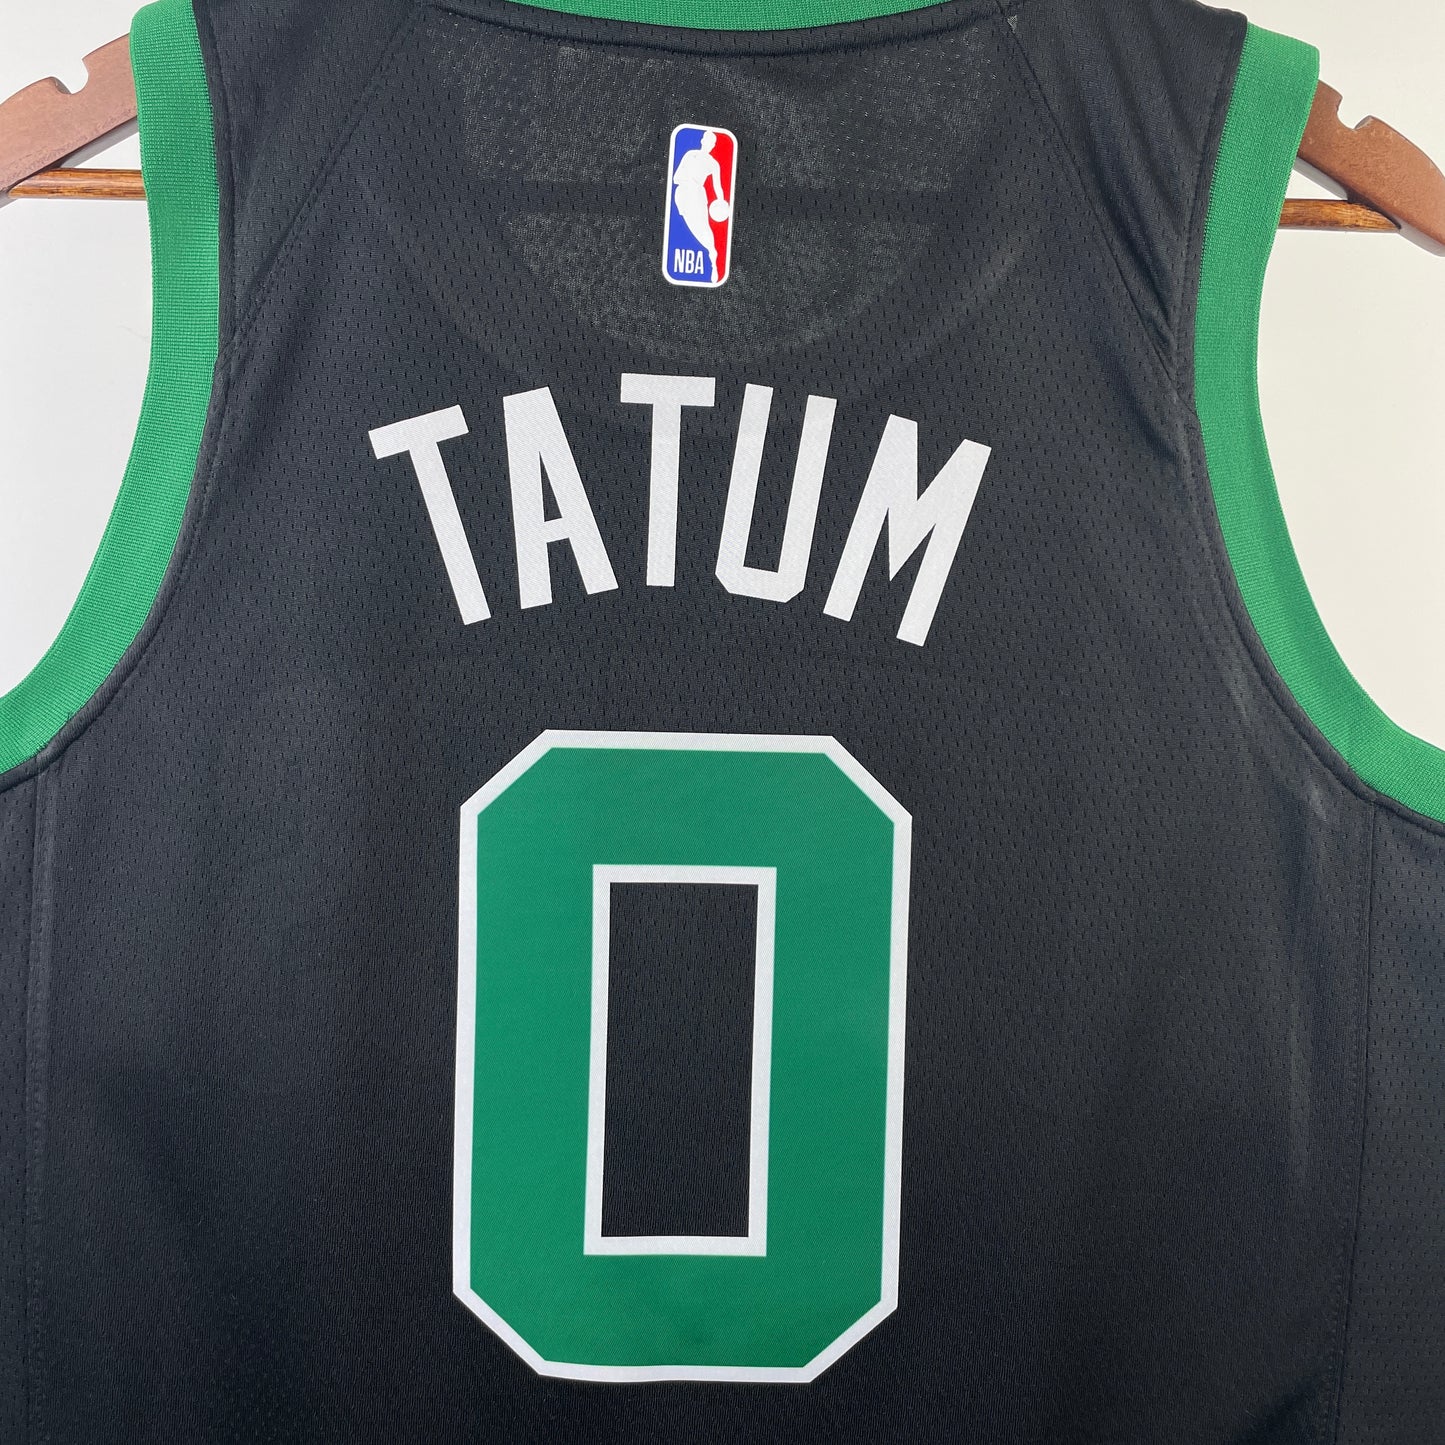 Jayson Tatum Boston Celtics Jordan Brand Statement Edition NBA Swingman Jersey - Black